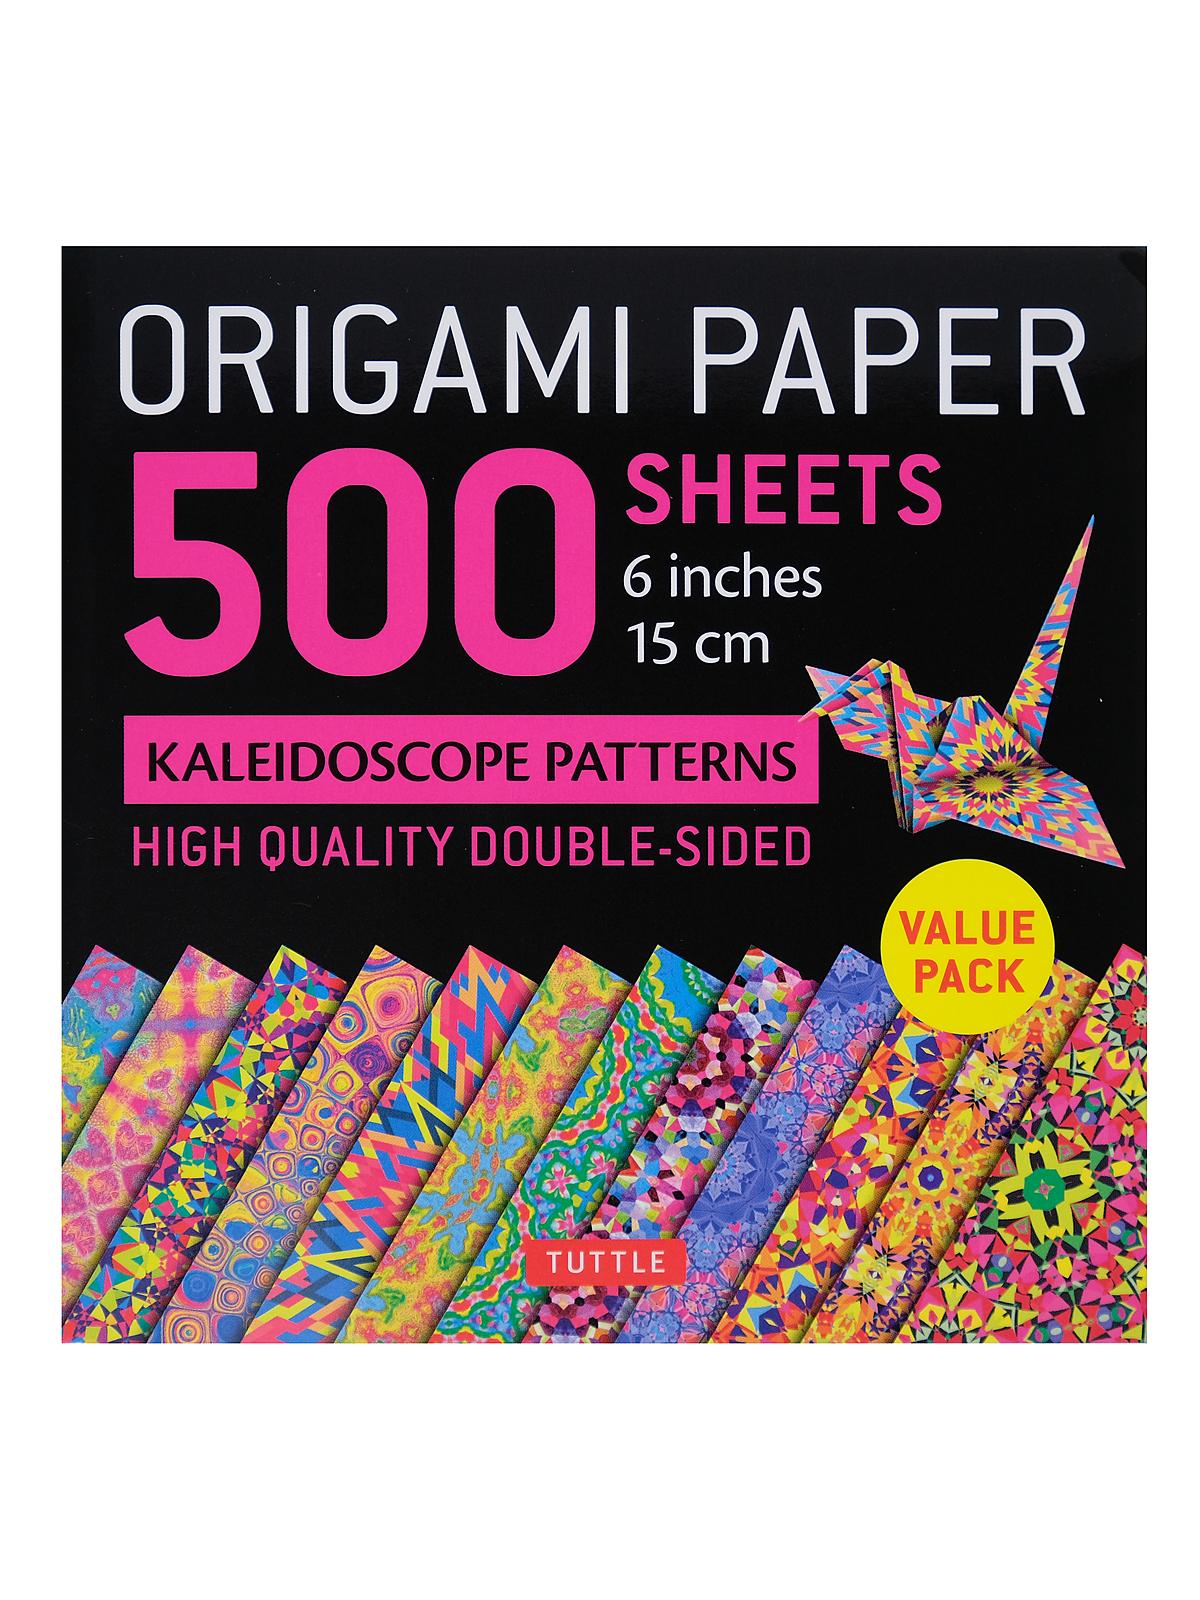 Origami Paper Kaleidoscope Patterns 6 X 6 500 Sheets